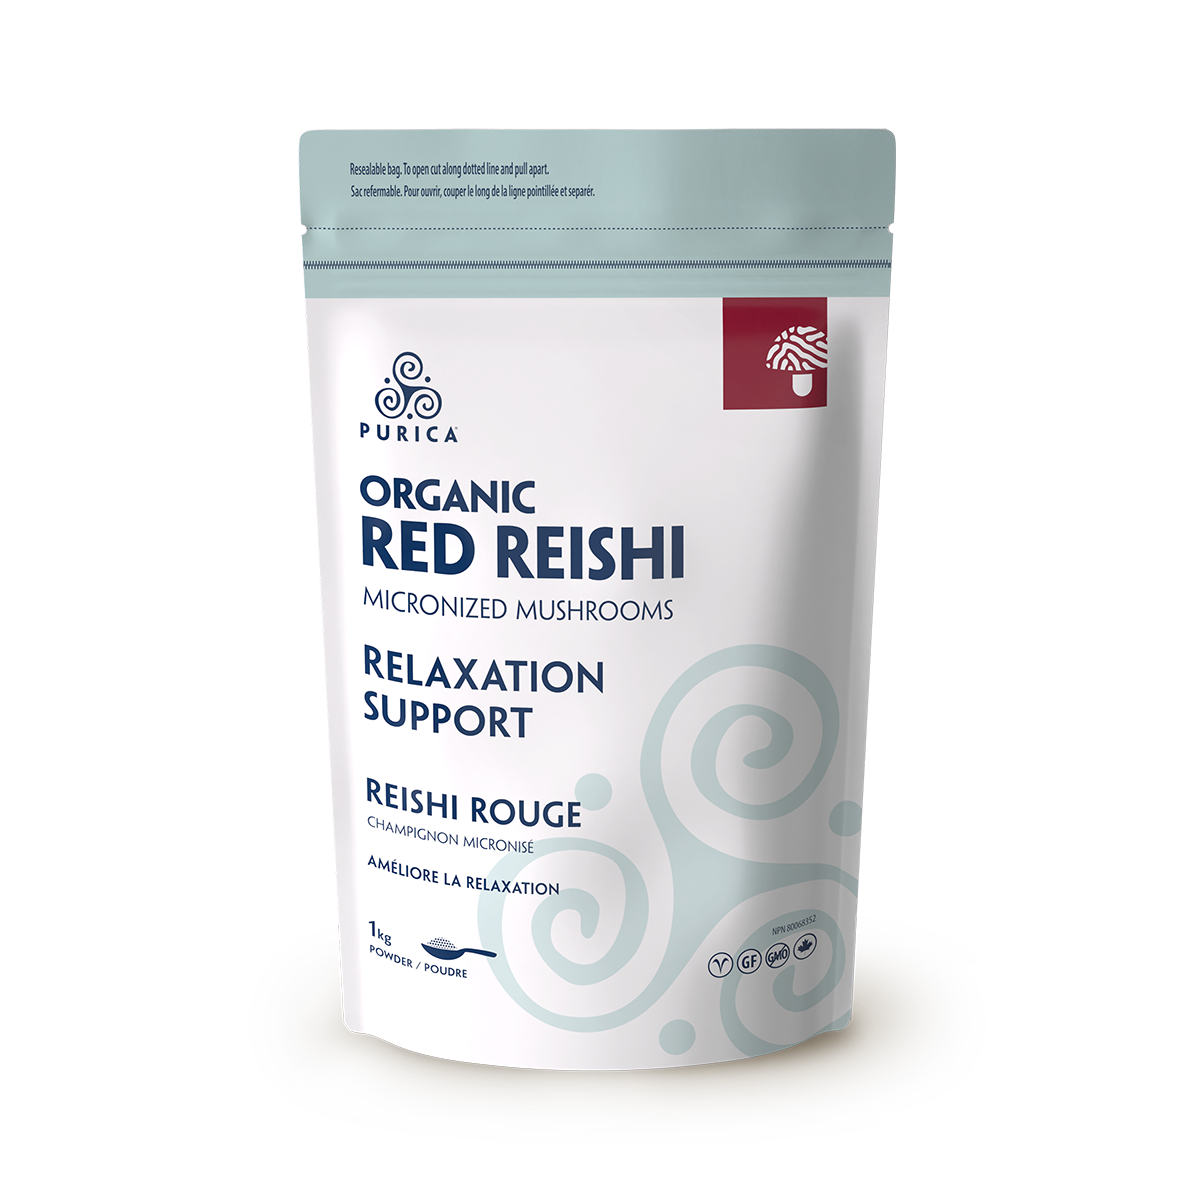 Red Reishi